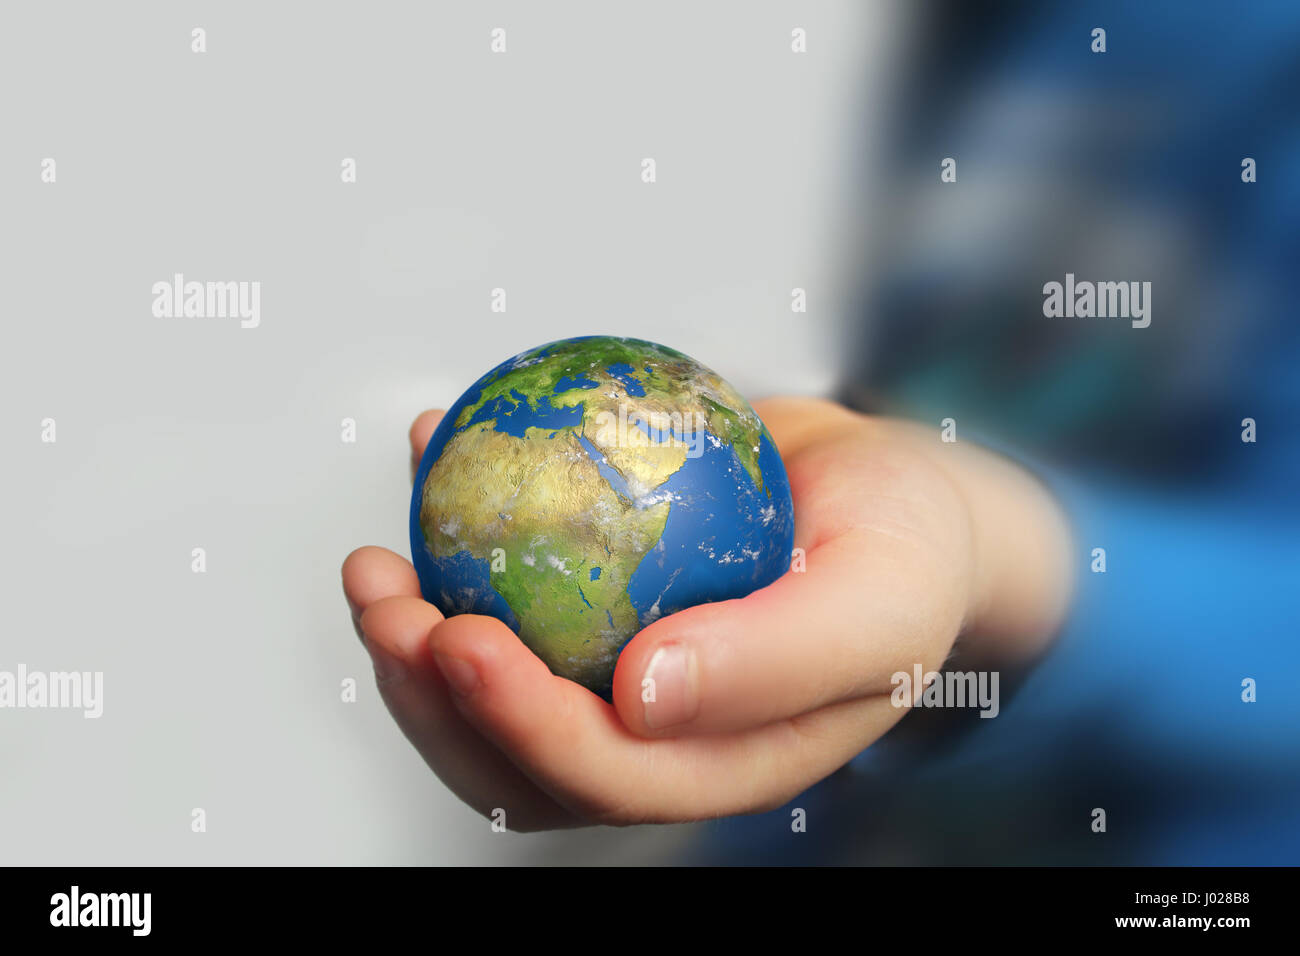 Child's hand holding globe on blured background Stock Photo